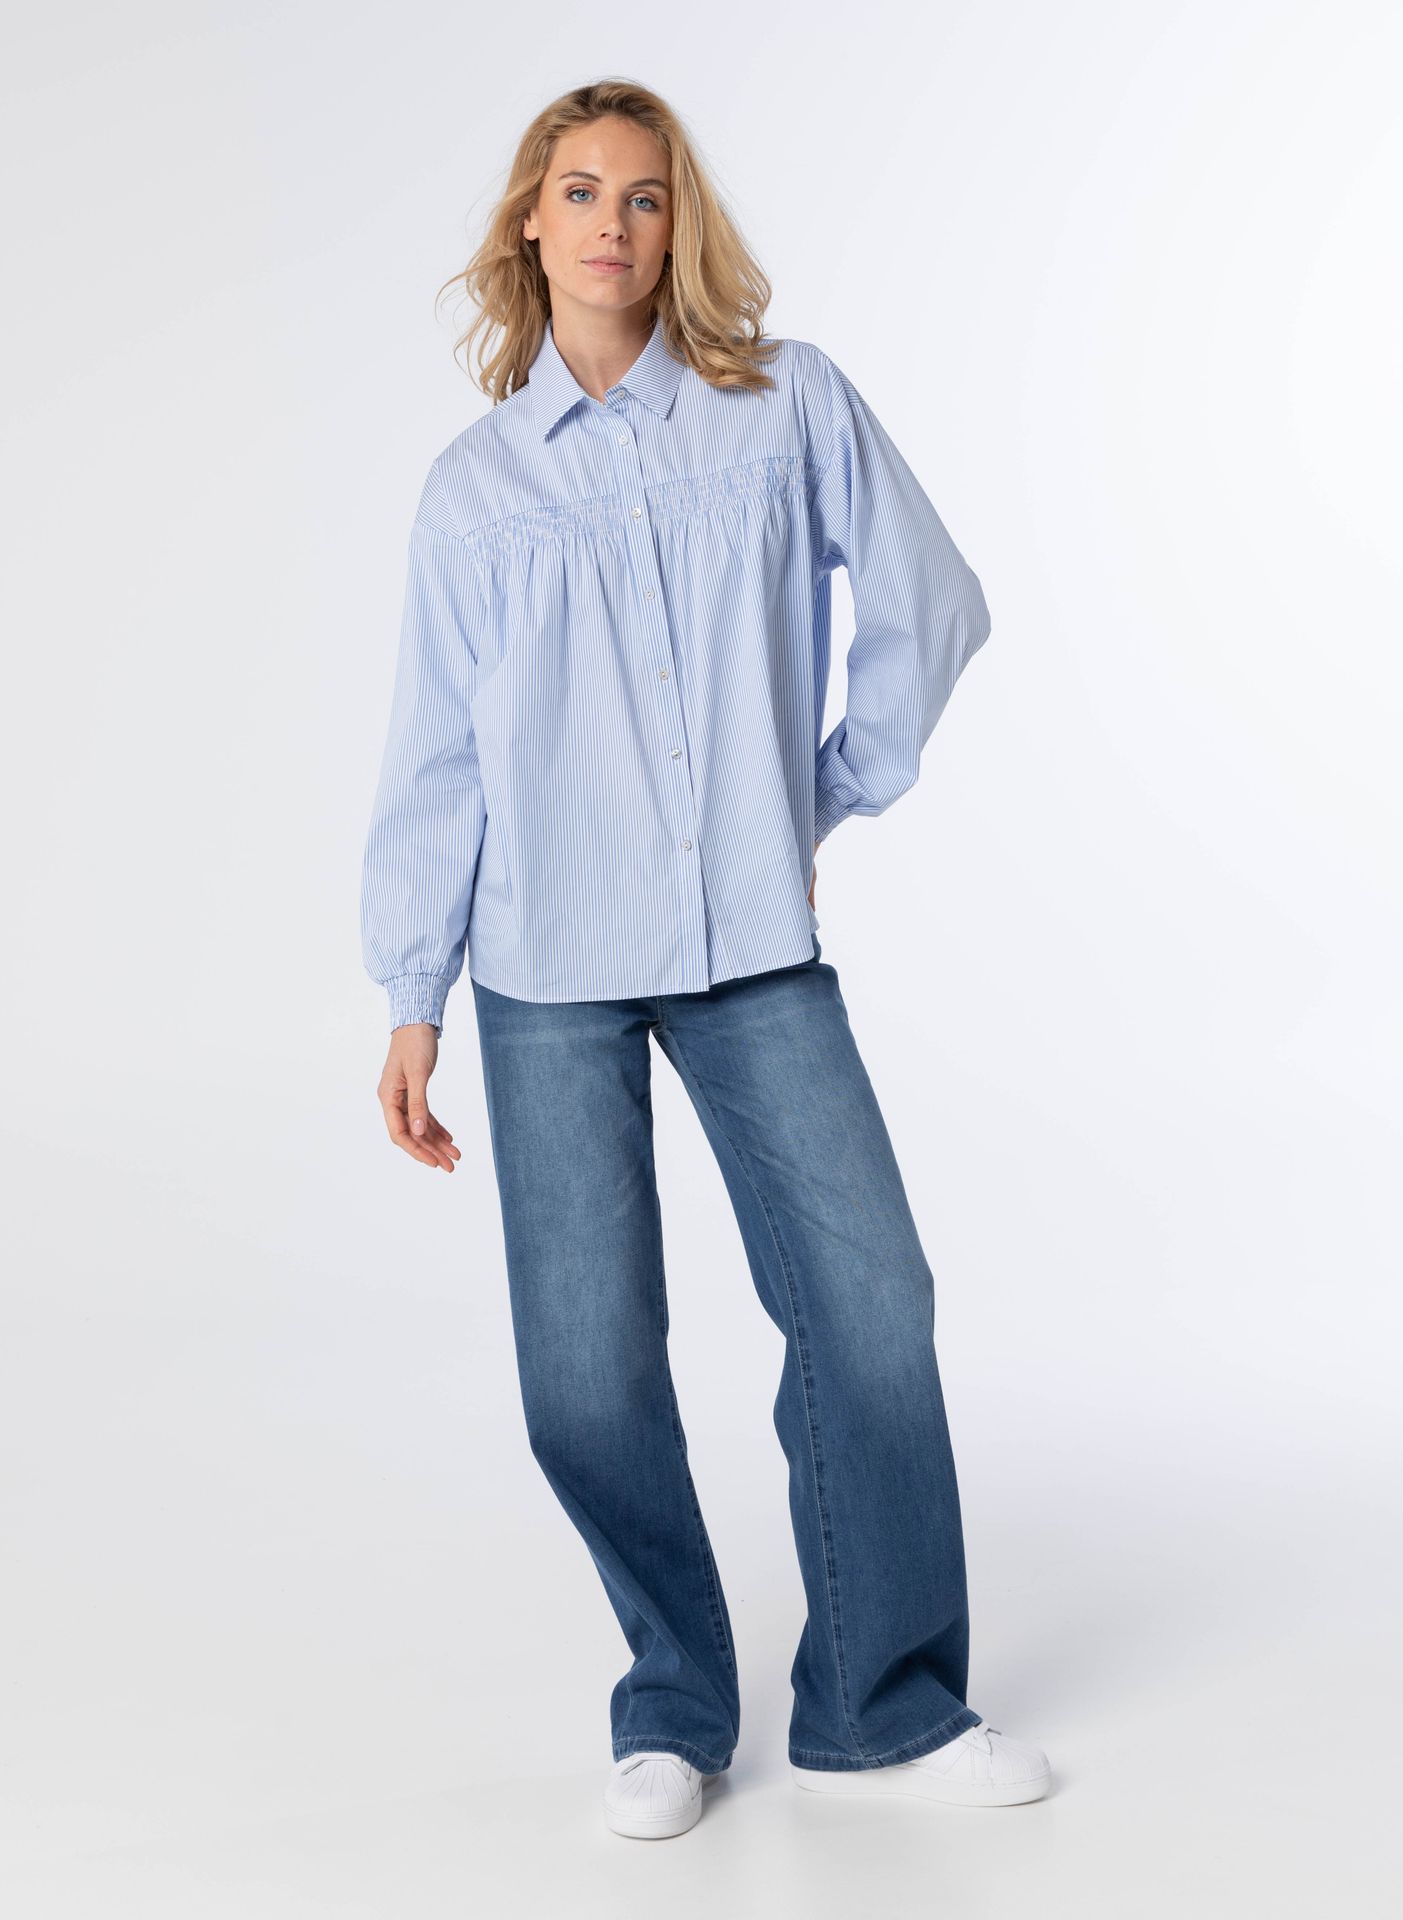 Norah Blauw gestreepte katoenen blouse blue/white 213942-431